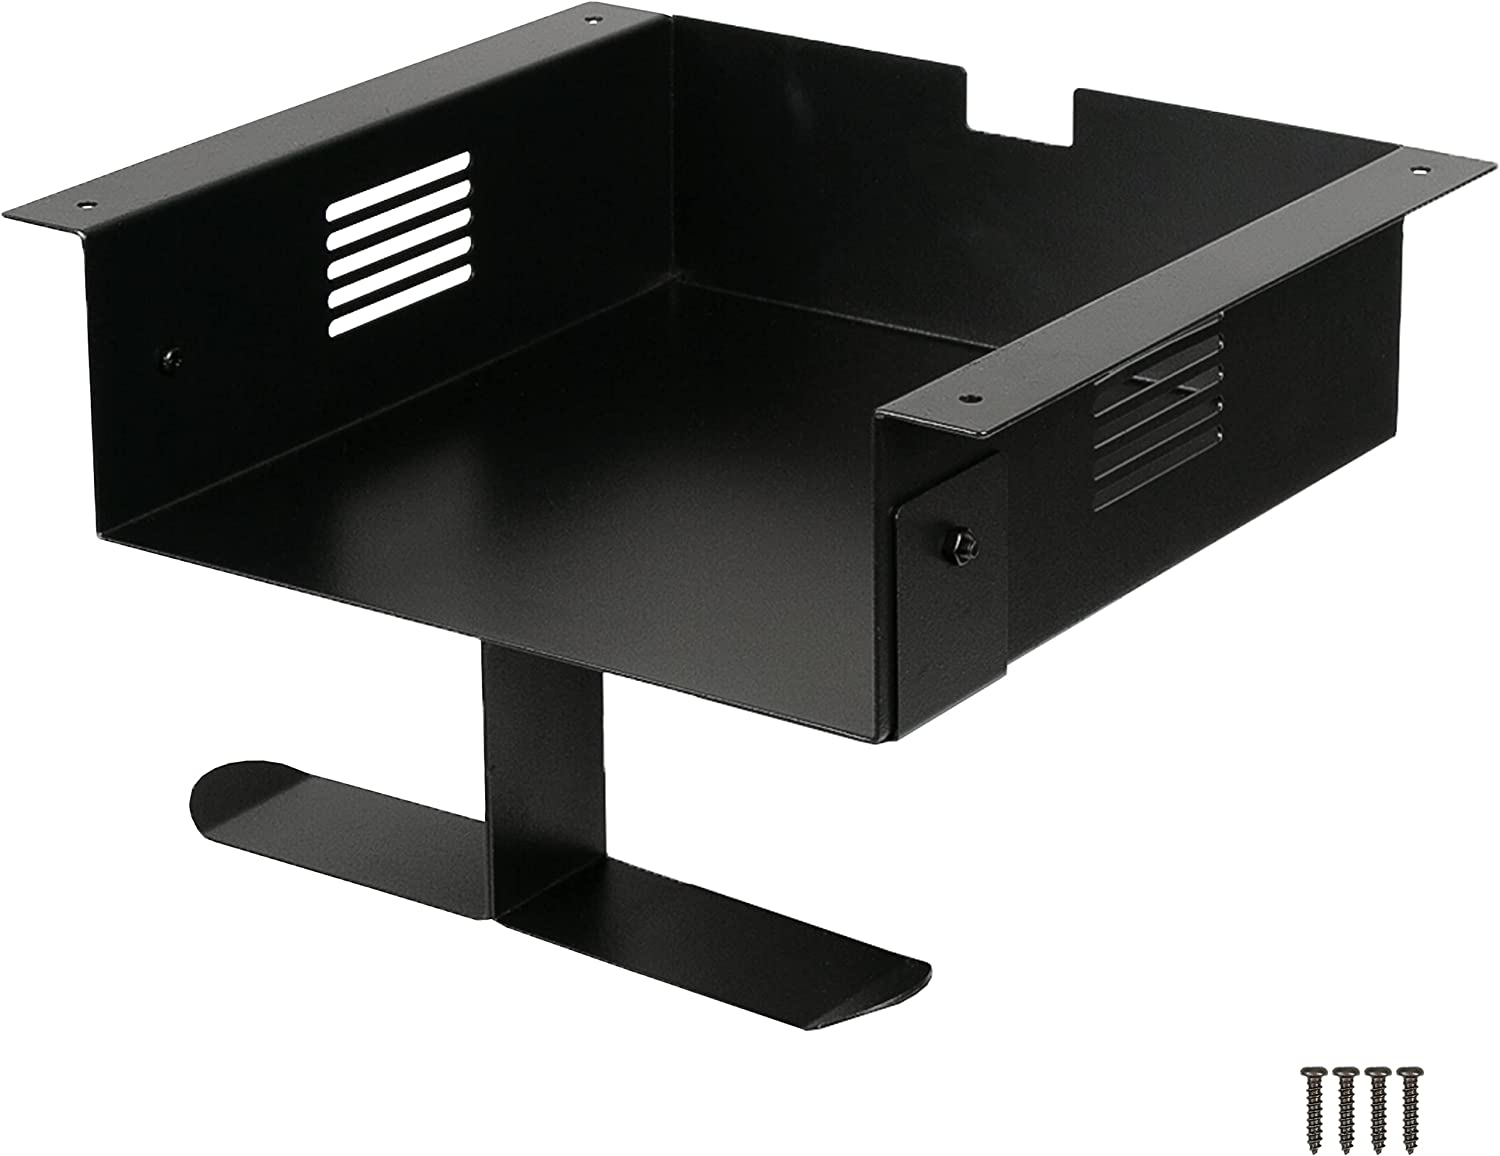 Ilyapa Under Desk CPU Mount with Headphone Hanger - 2.8 x 8.1 x 8.5 Steel Computer Mount for Home Office Desk - Includes Wood Screws